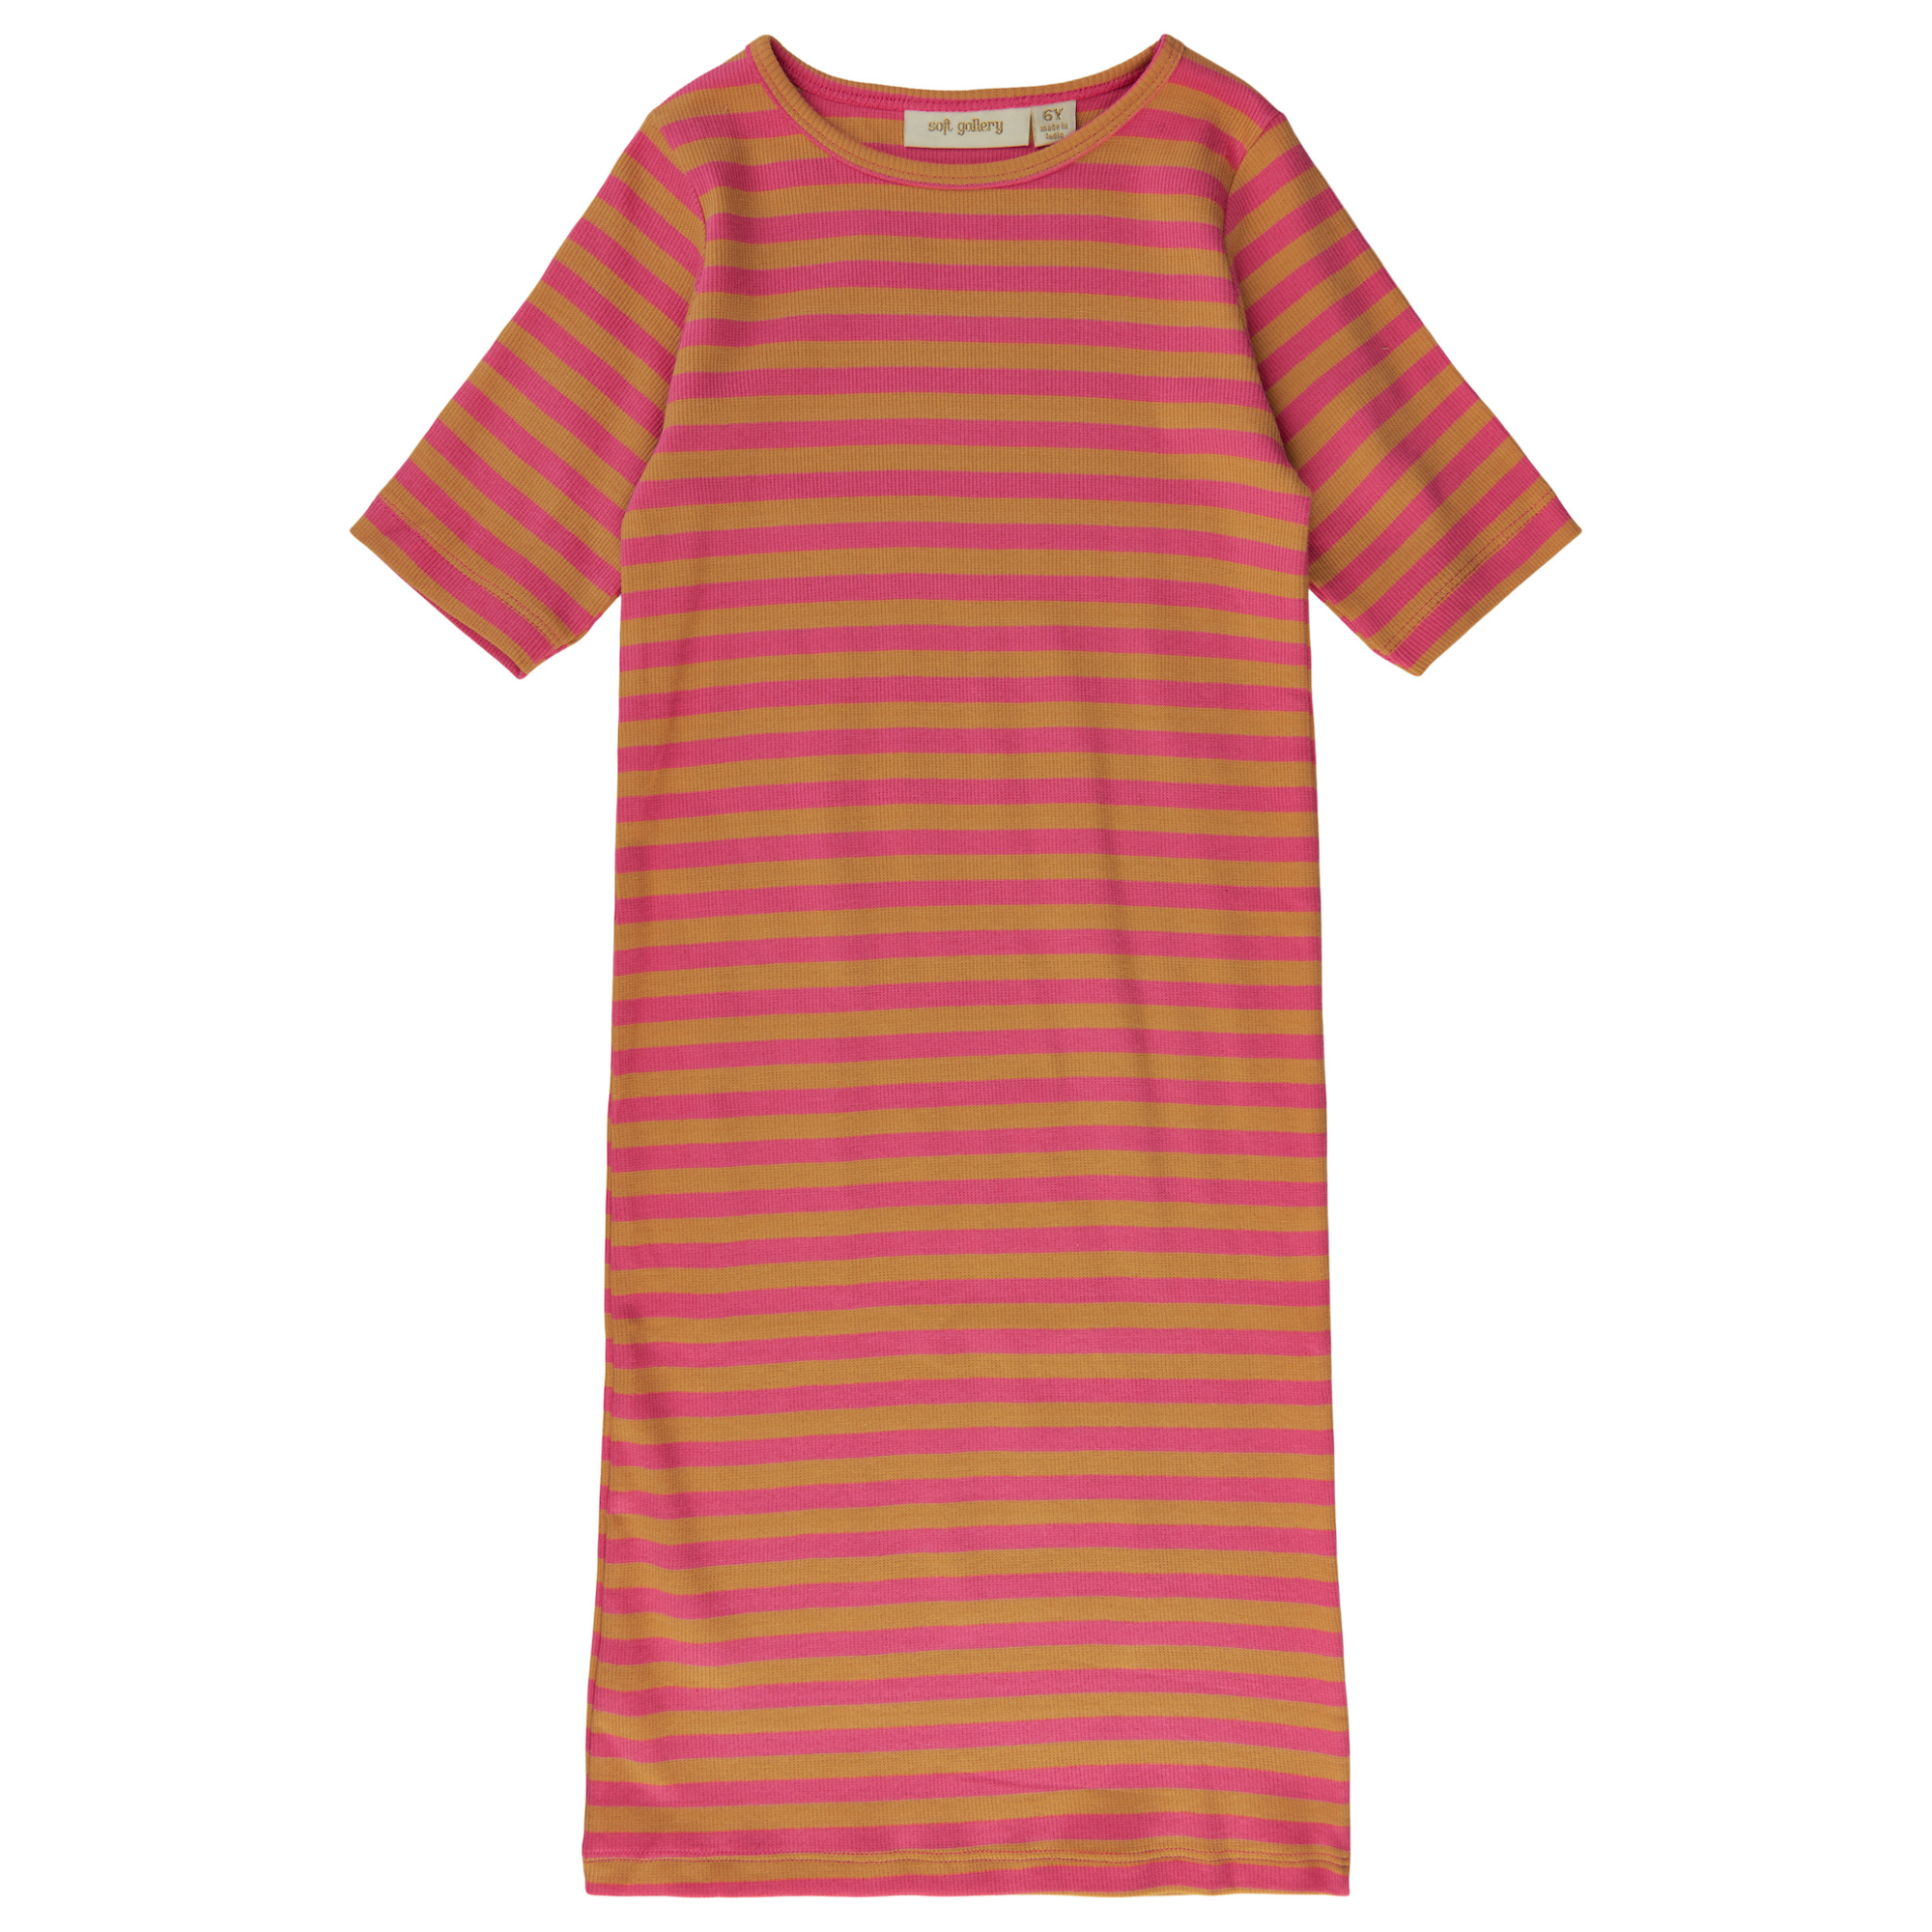 Soft Gallery - Bella YD Striped SS Dress, SG2106 - Yam / Pink